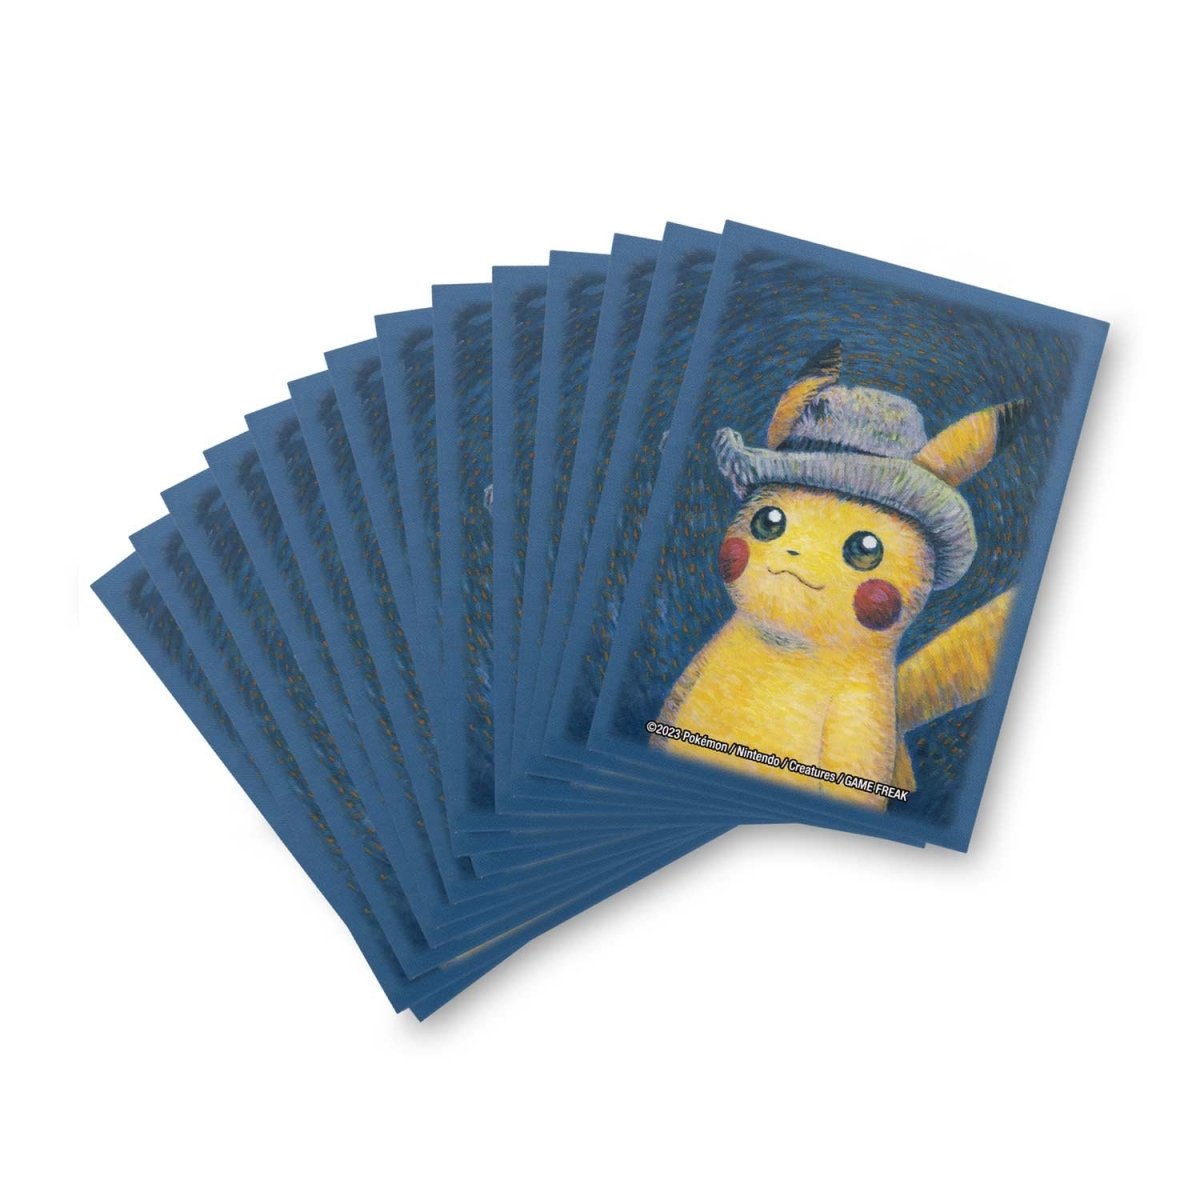 Pokemon Card Sleeves PIKACHU ADVENTURE PIKACHU and LUGIA